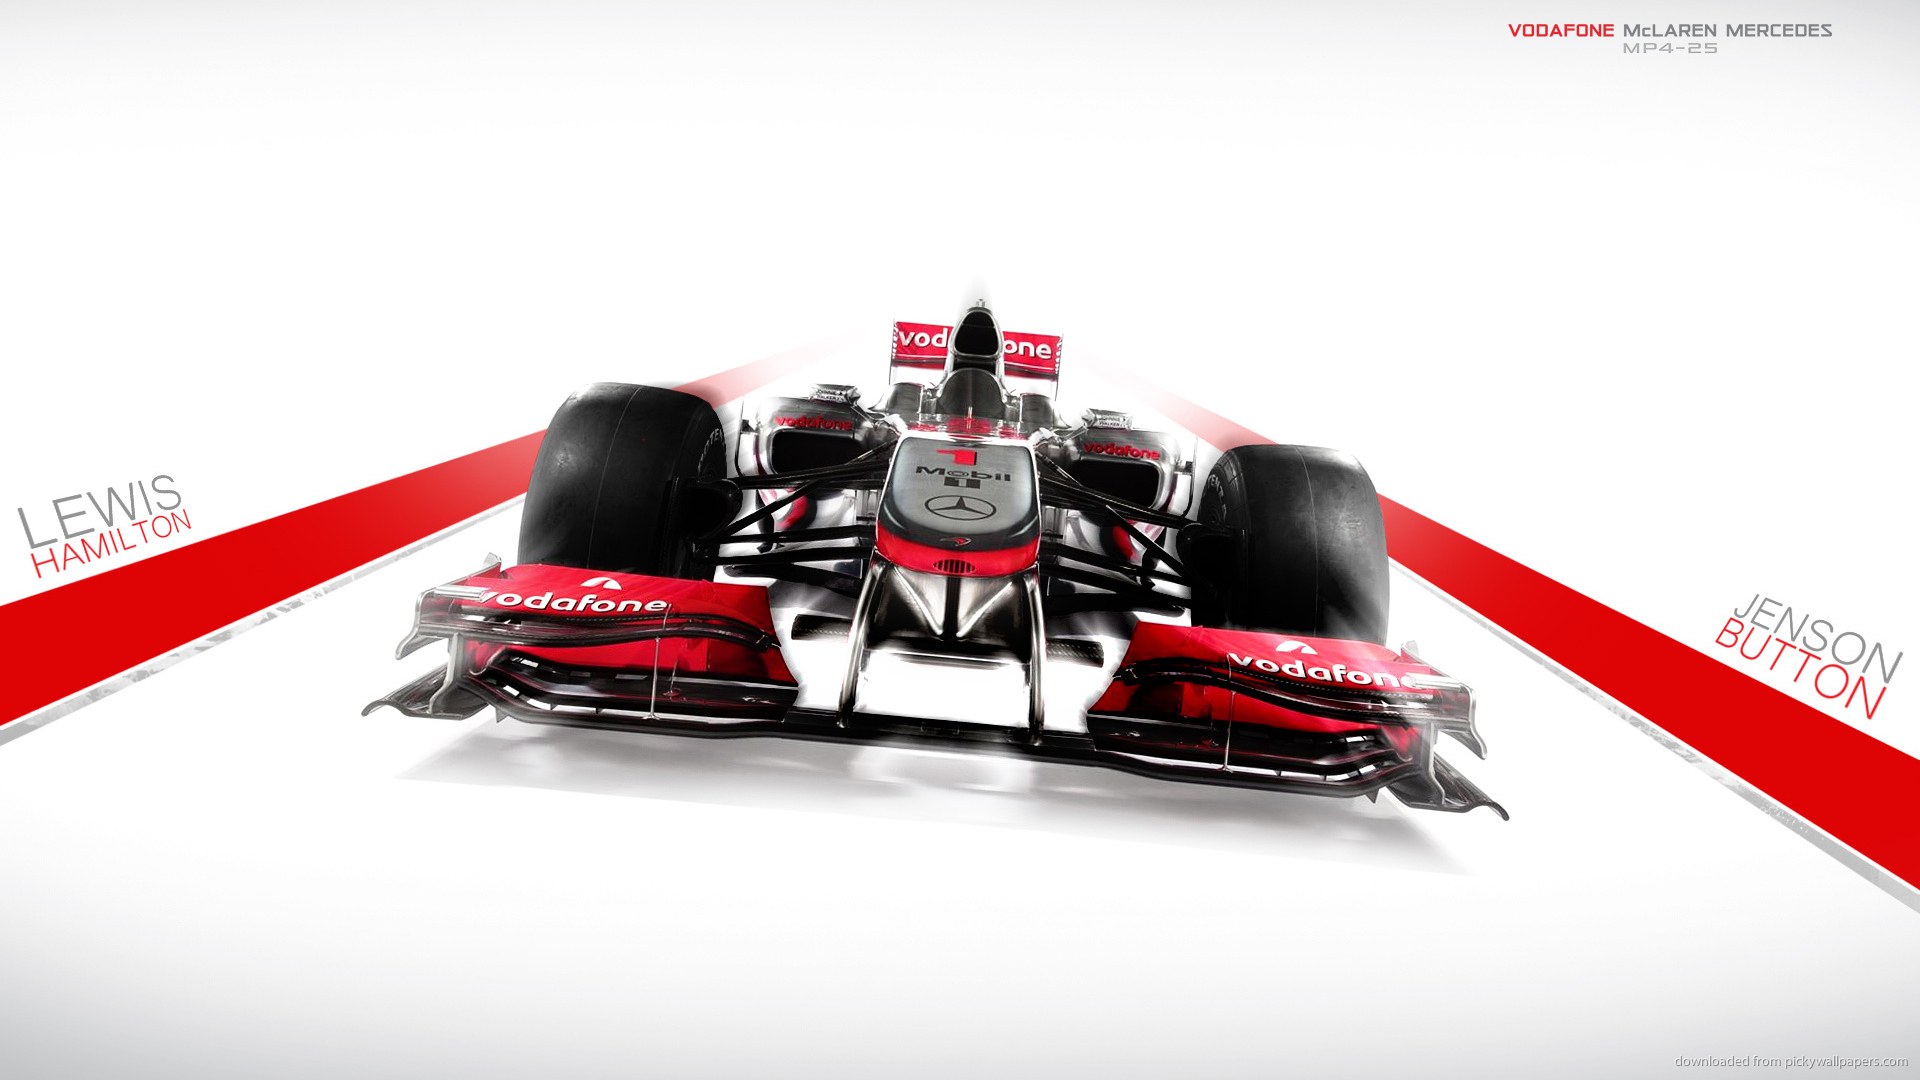 Mercedes Vodafone Wallpaper Mclaren Cars Formula